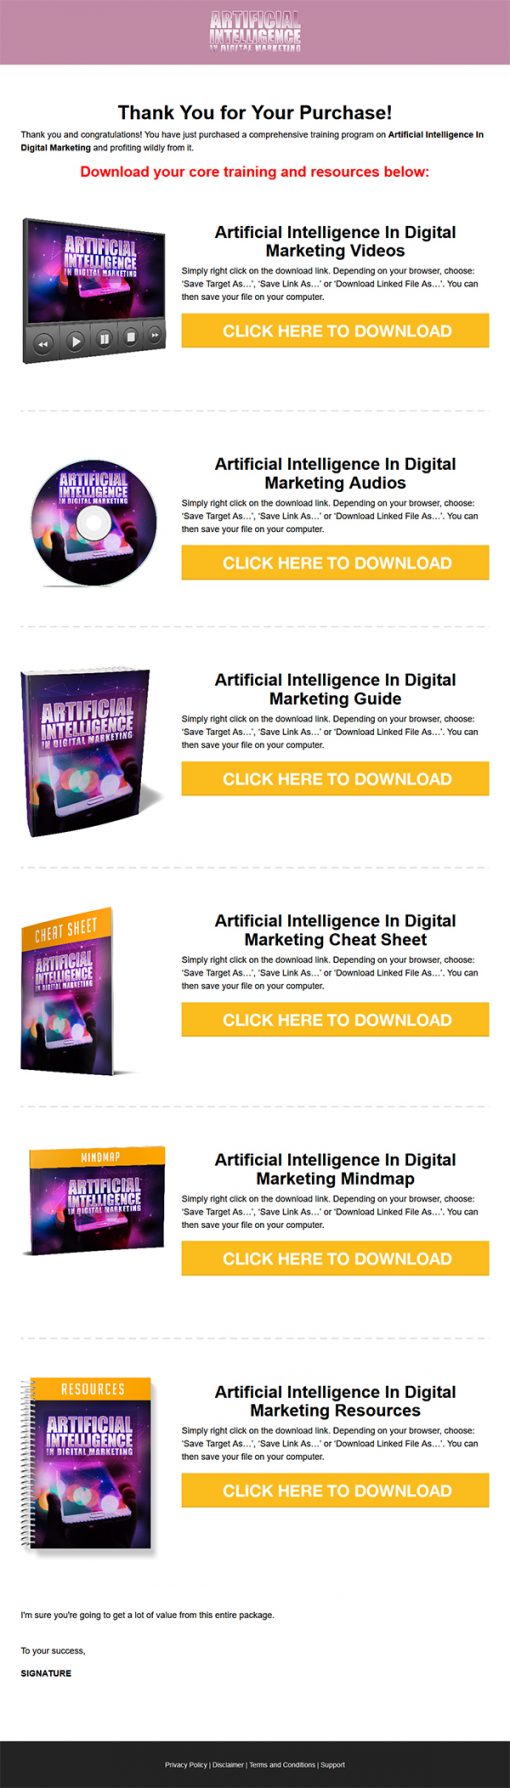 Artificial Intelligence in Digital Marketing Ebook and Videos MRR